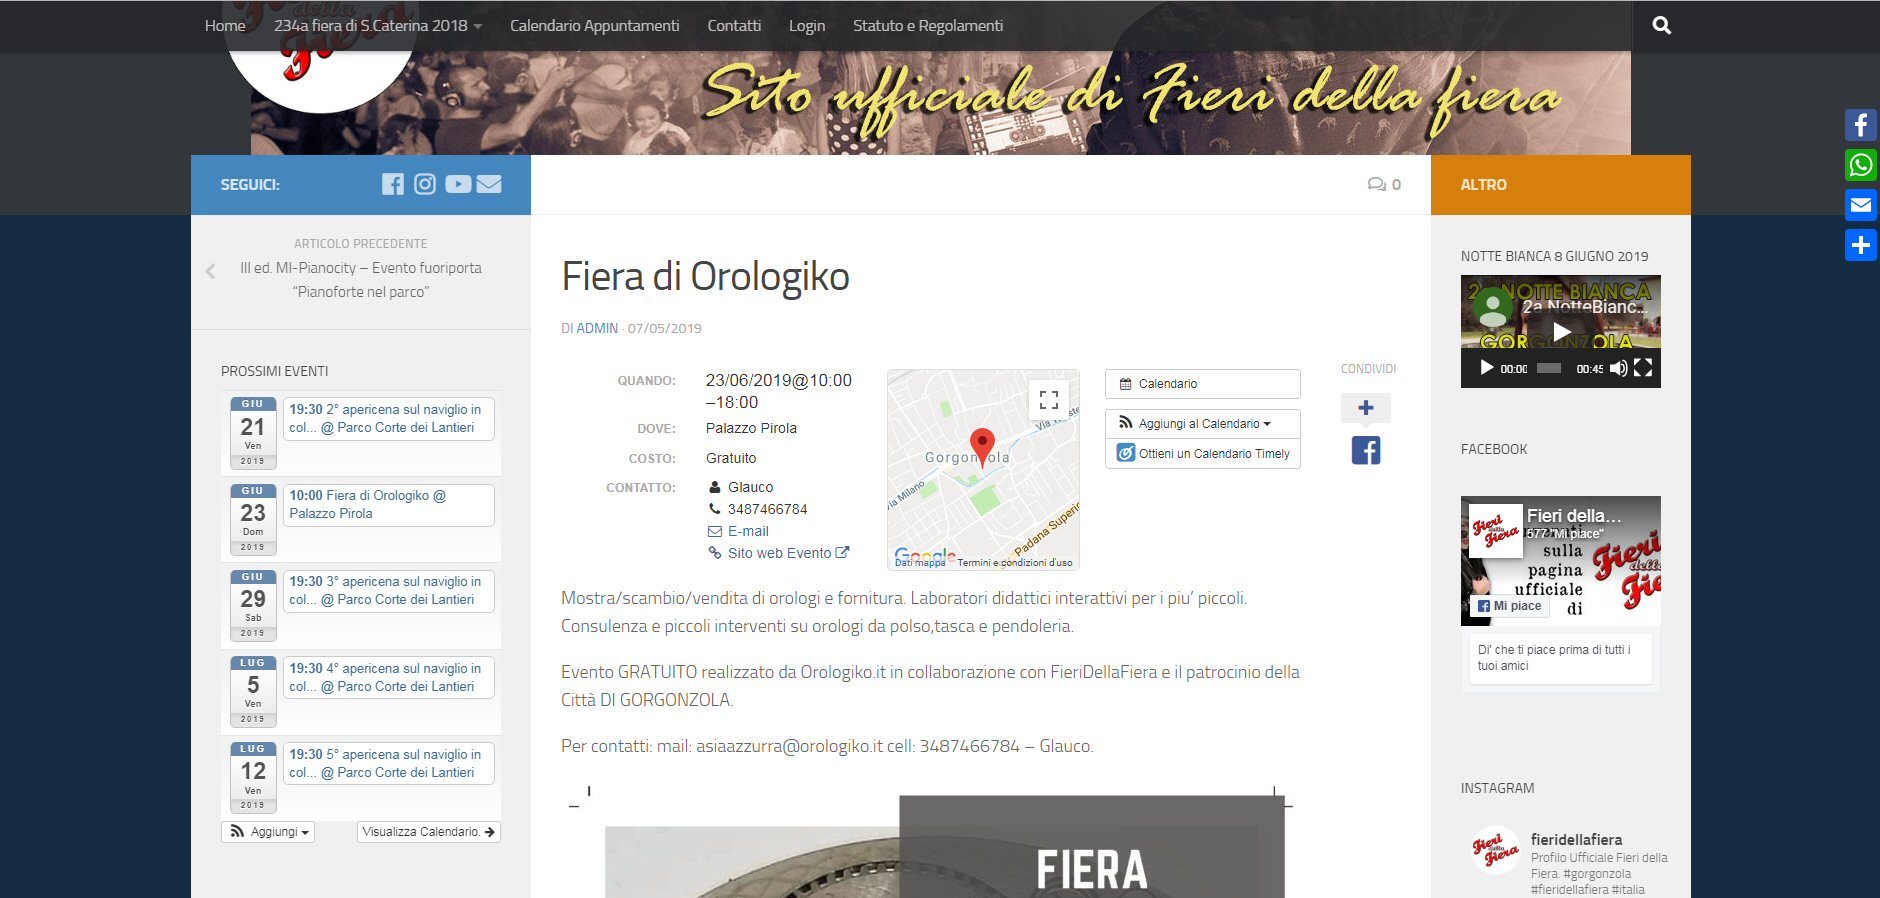 fiera gorngonzola Orologiko 2019_web3.jpg